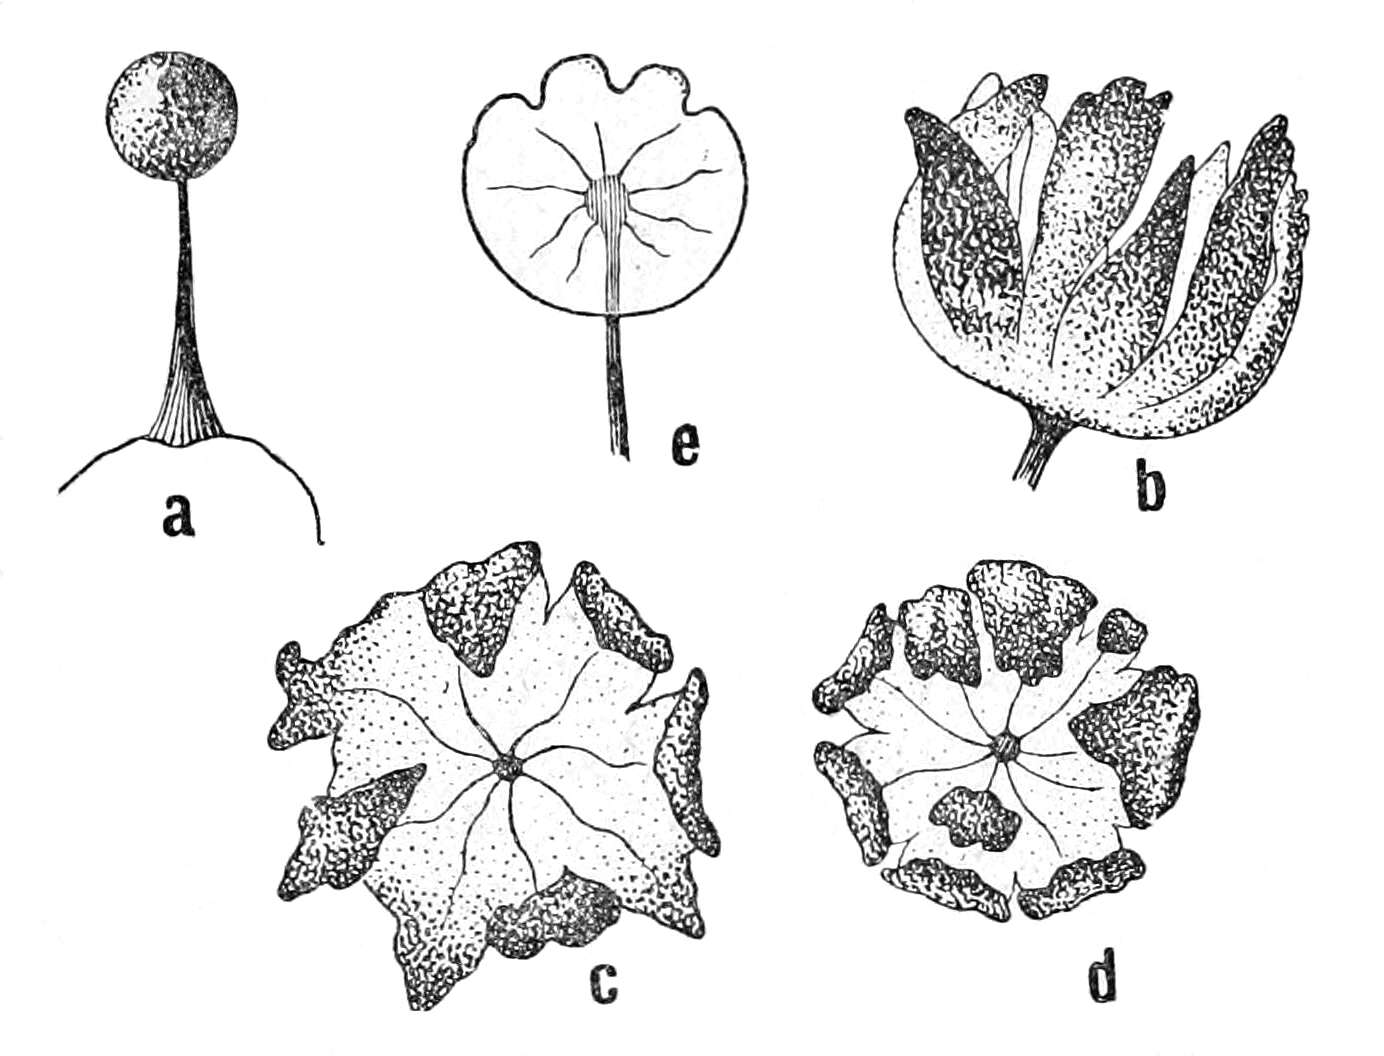 Image of Echinosteliales